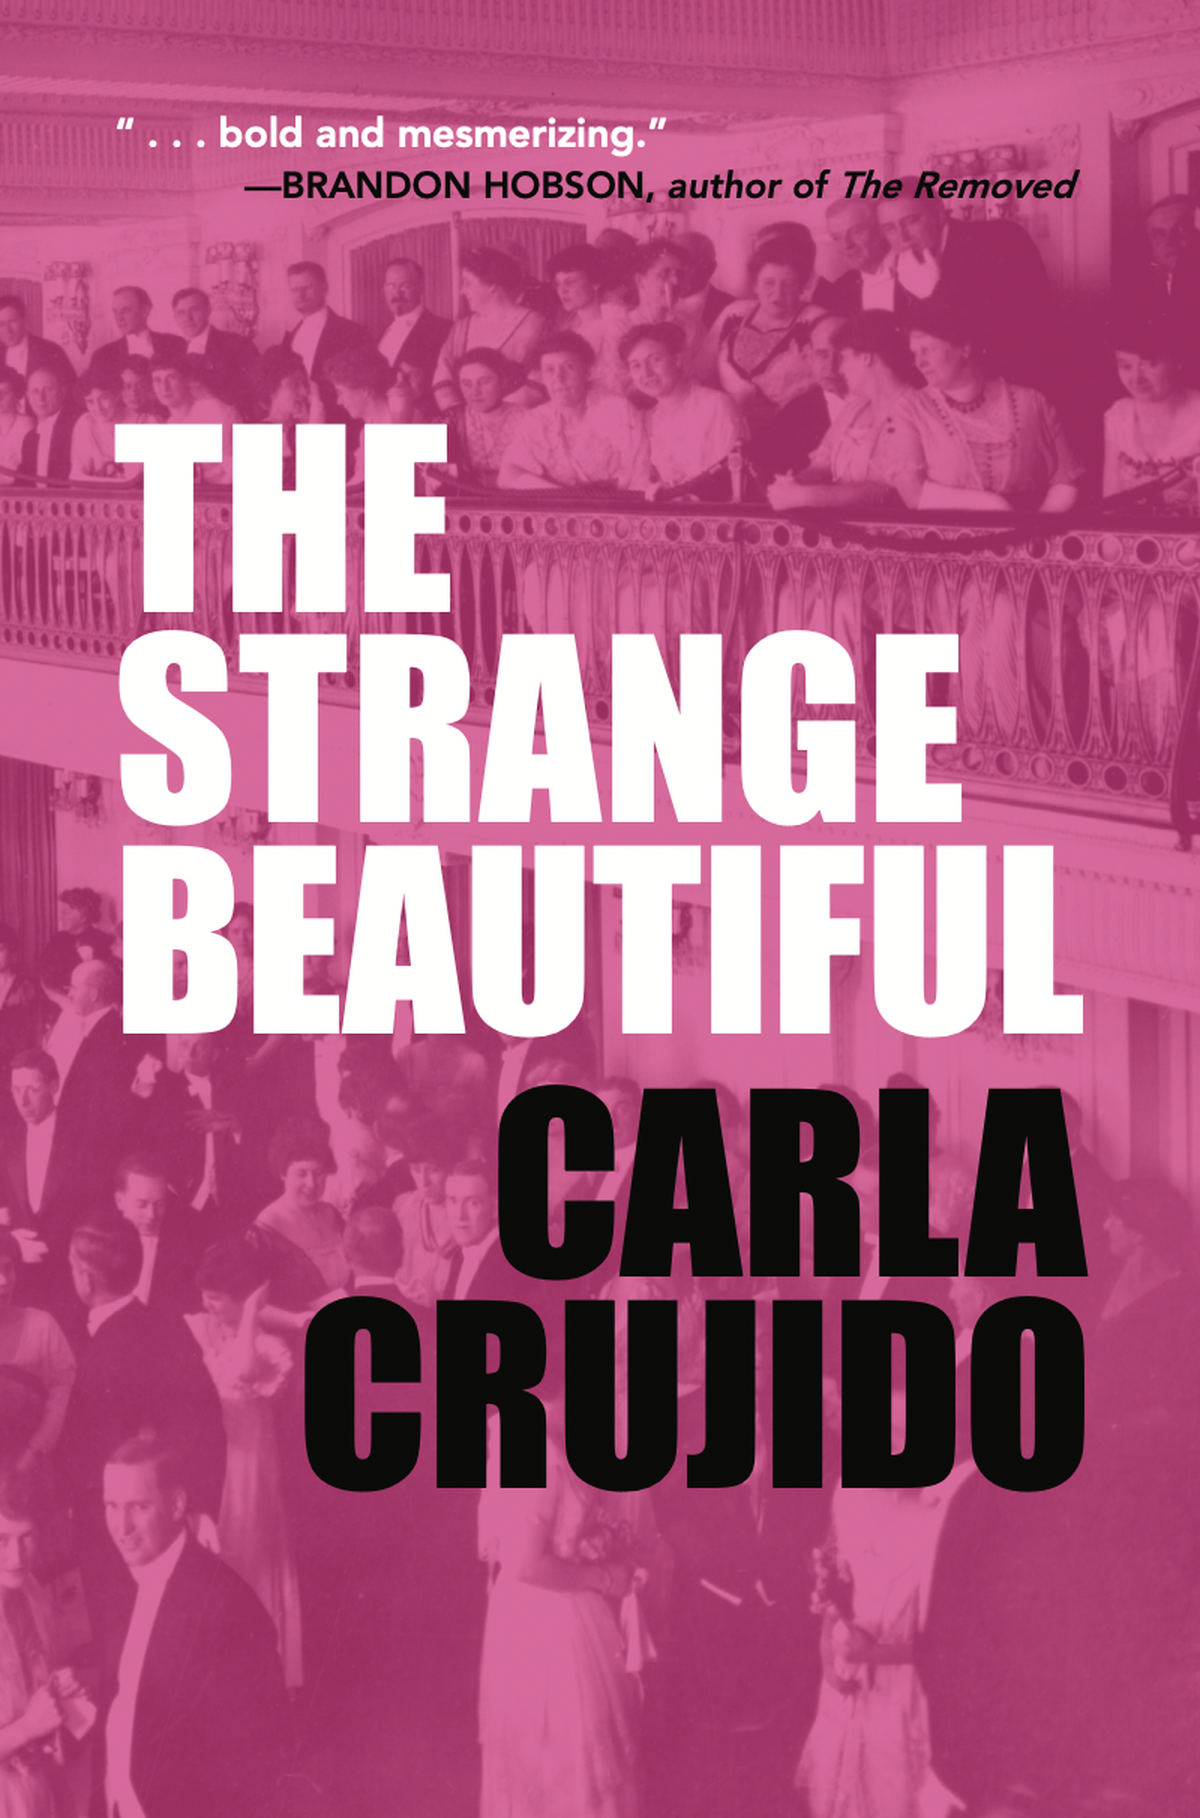 Carla Crujido’s “The Strange Beautiful”  (Courtesy)